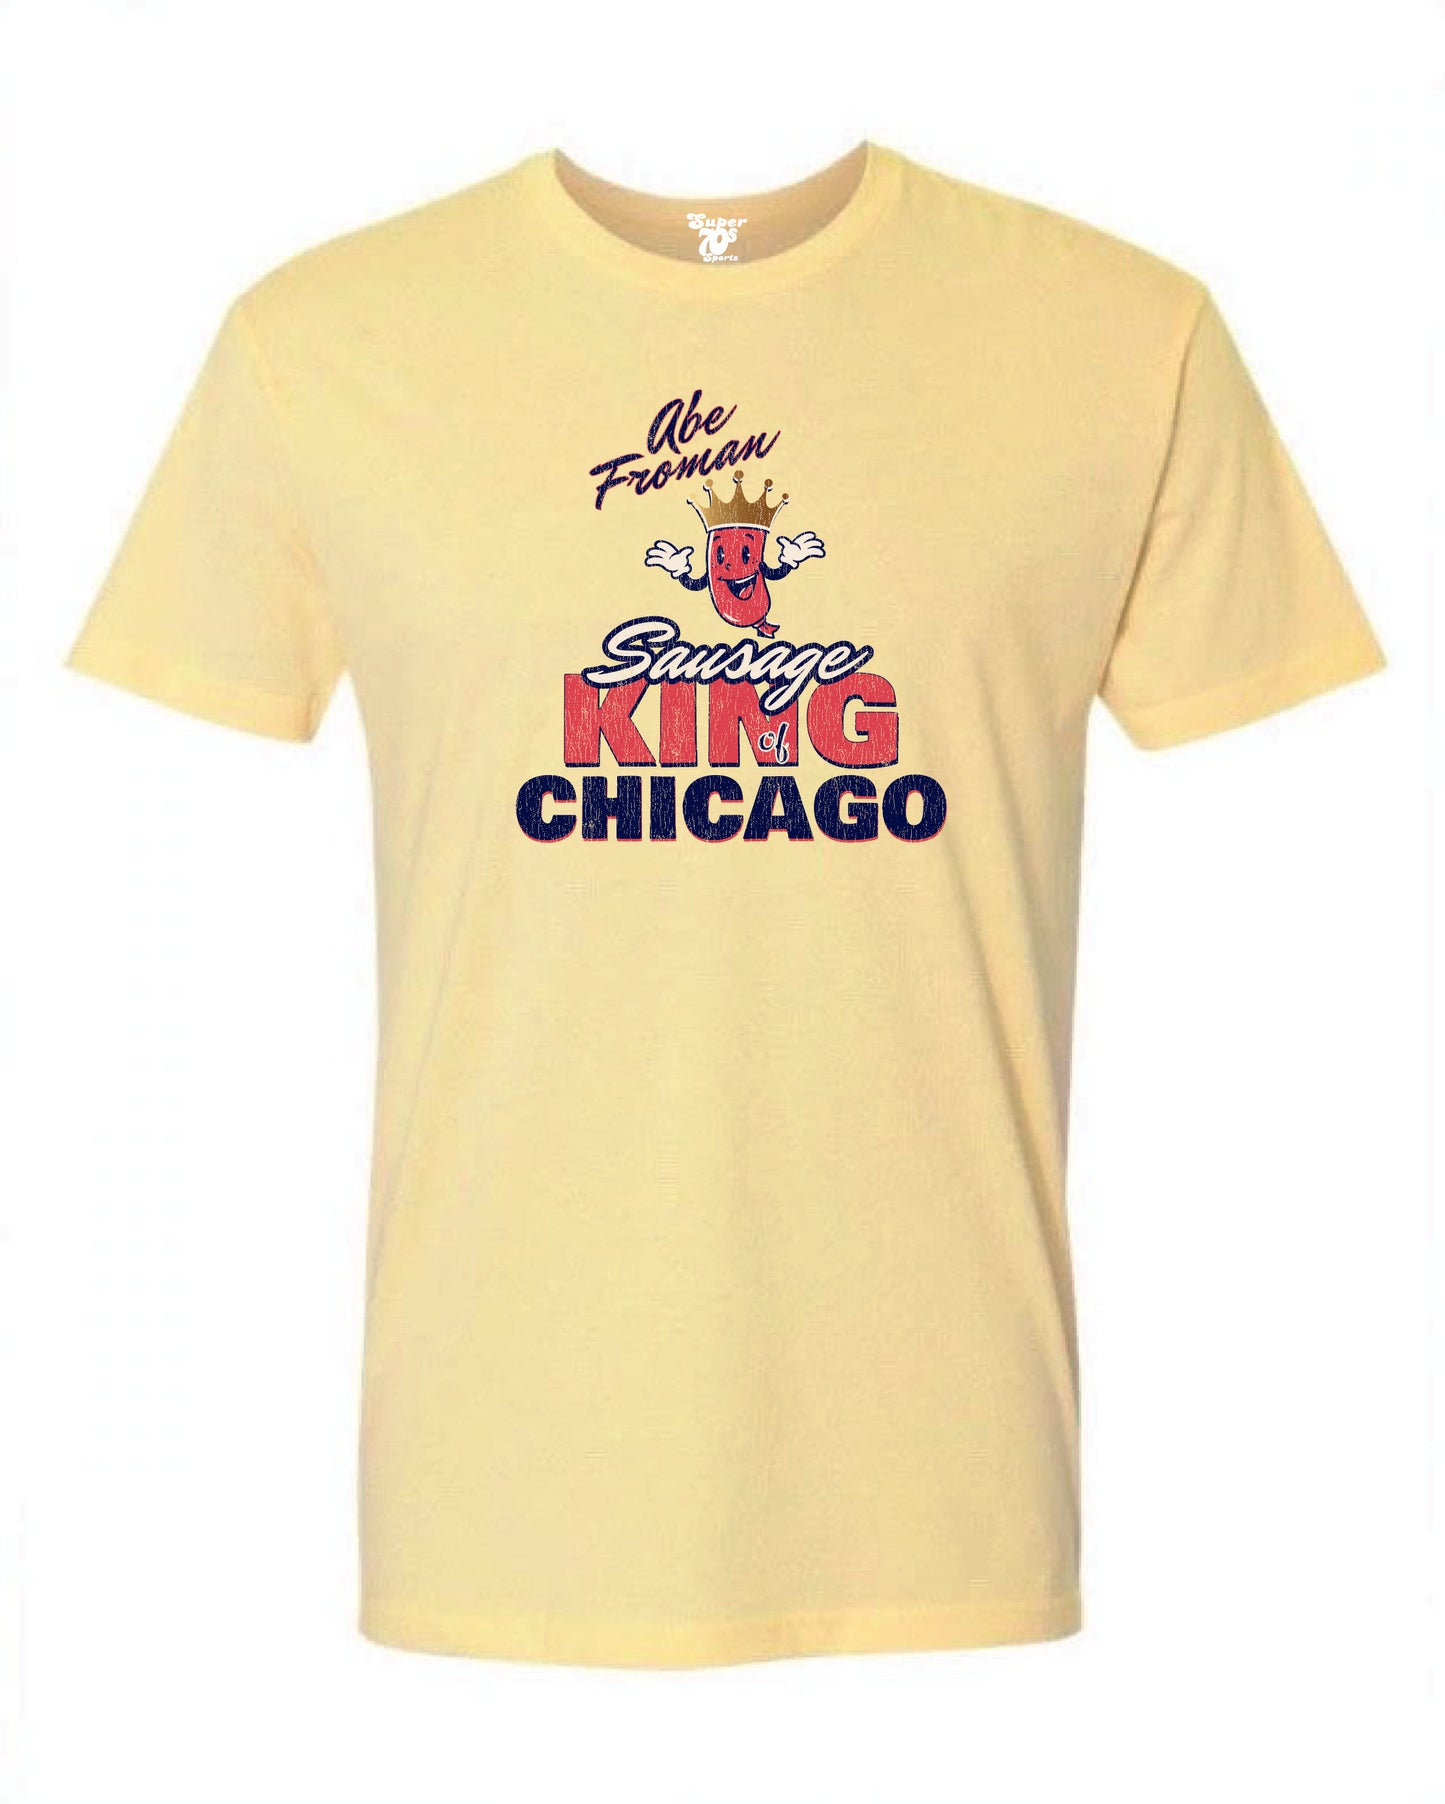 Sausage King of Chicago